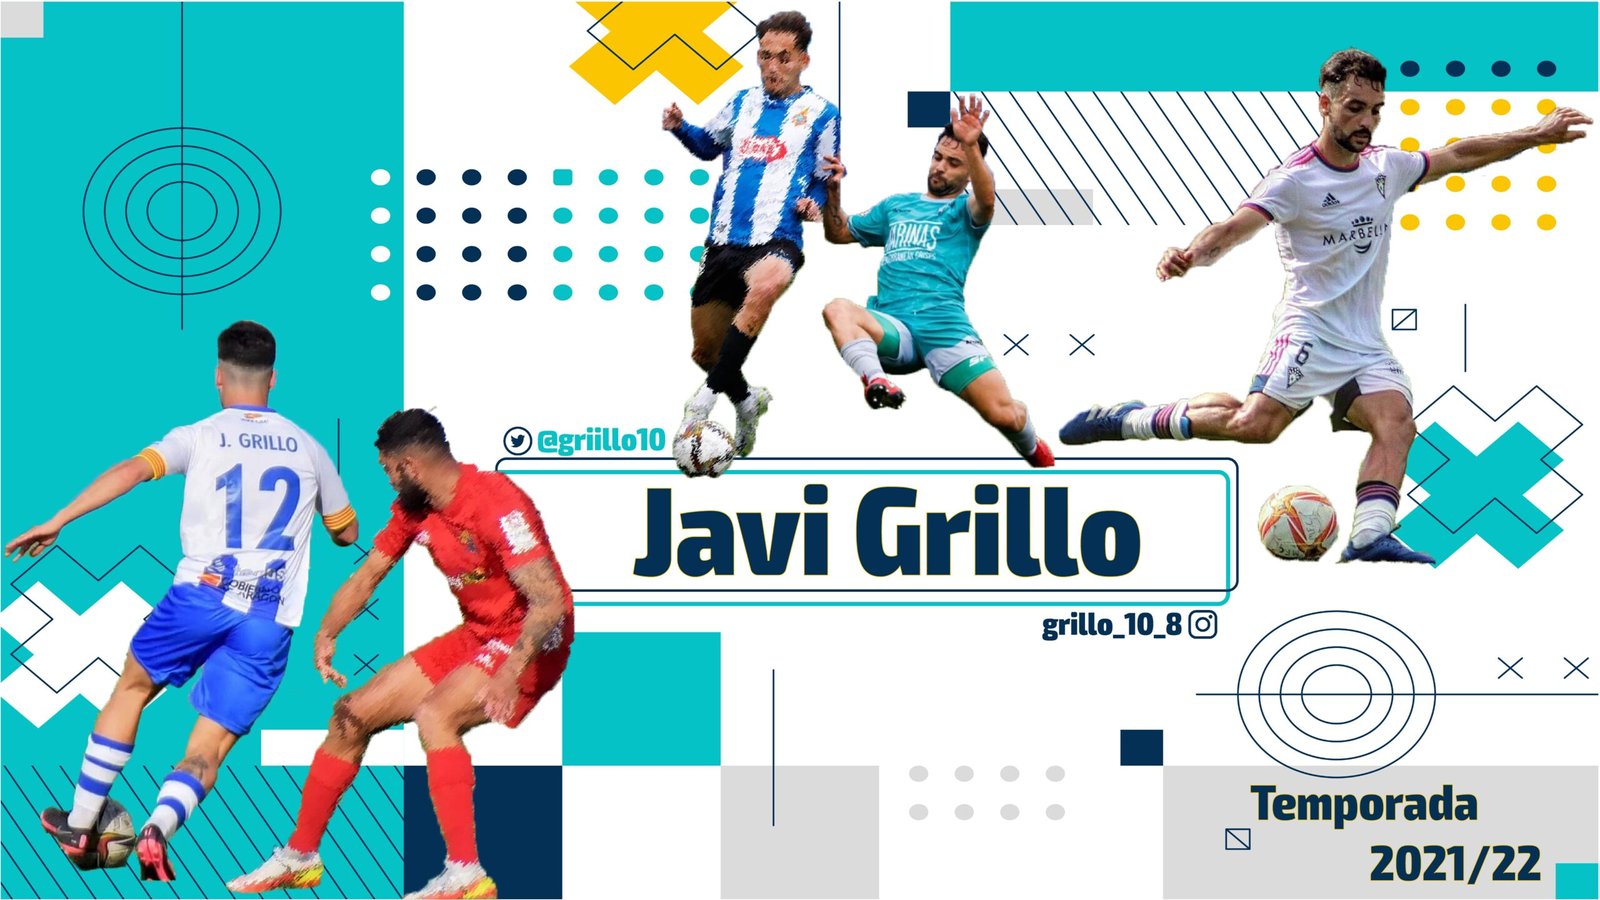 Highlights  | Javi Grillo – Temporada 2021/22